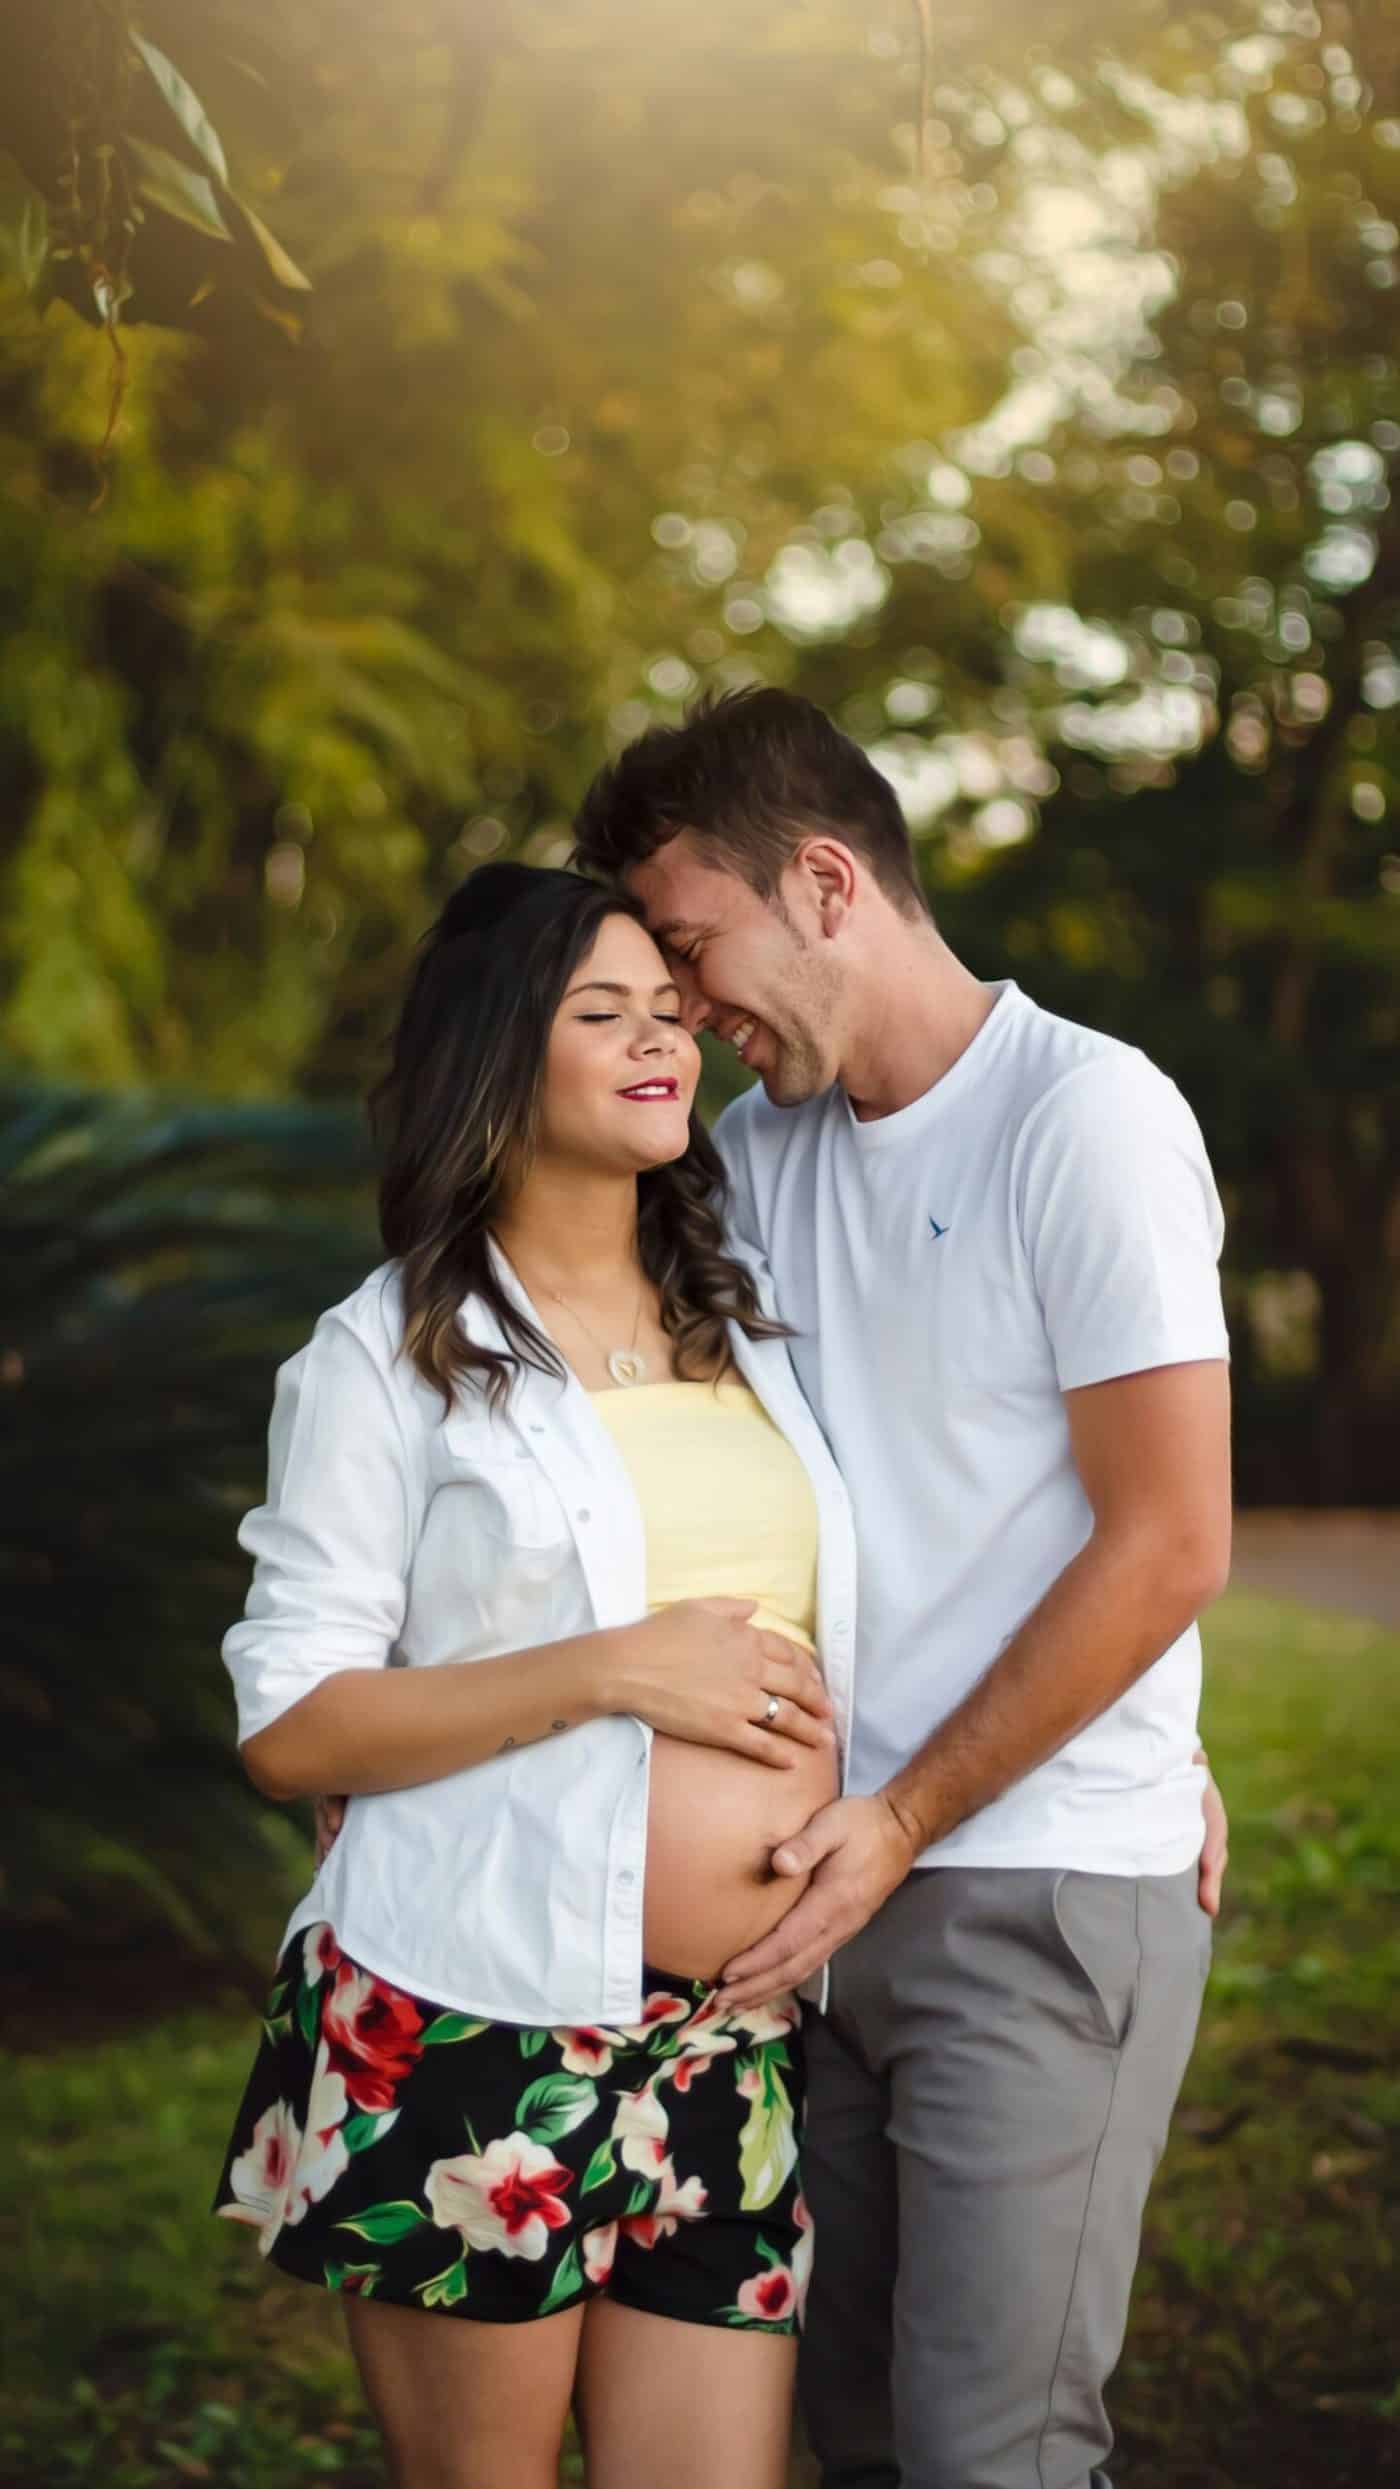 Pregnancy photoshoot idea - with dad